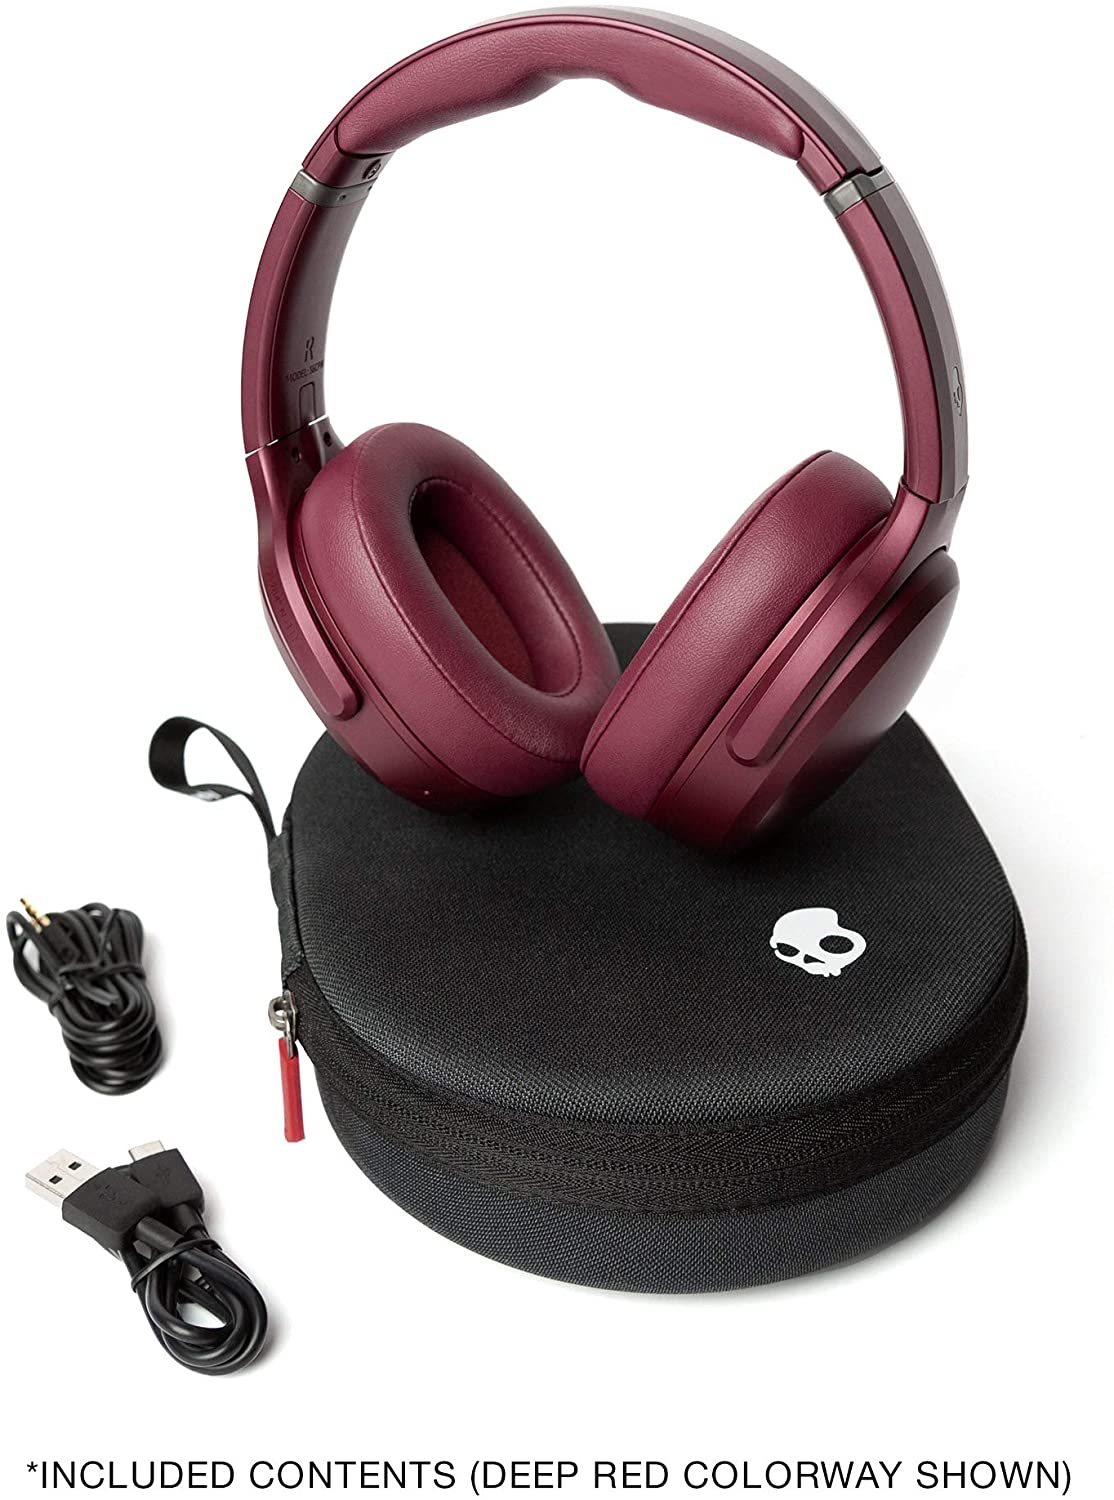 3: Skullcandy Crusher ANC Personalized Noise Canceling Wireless Headphone